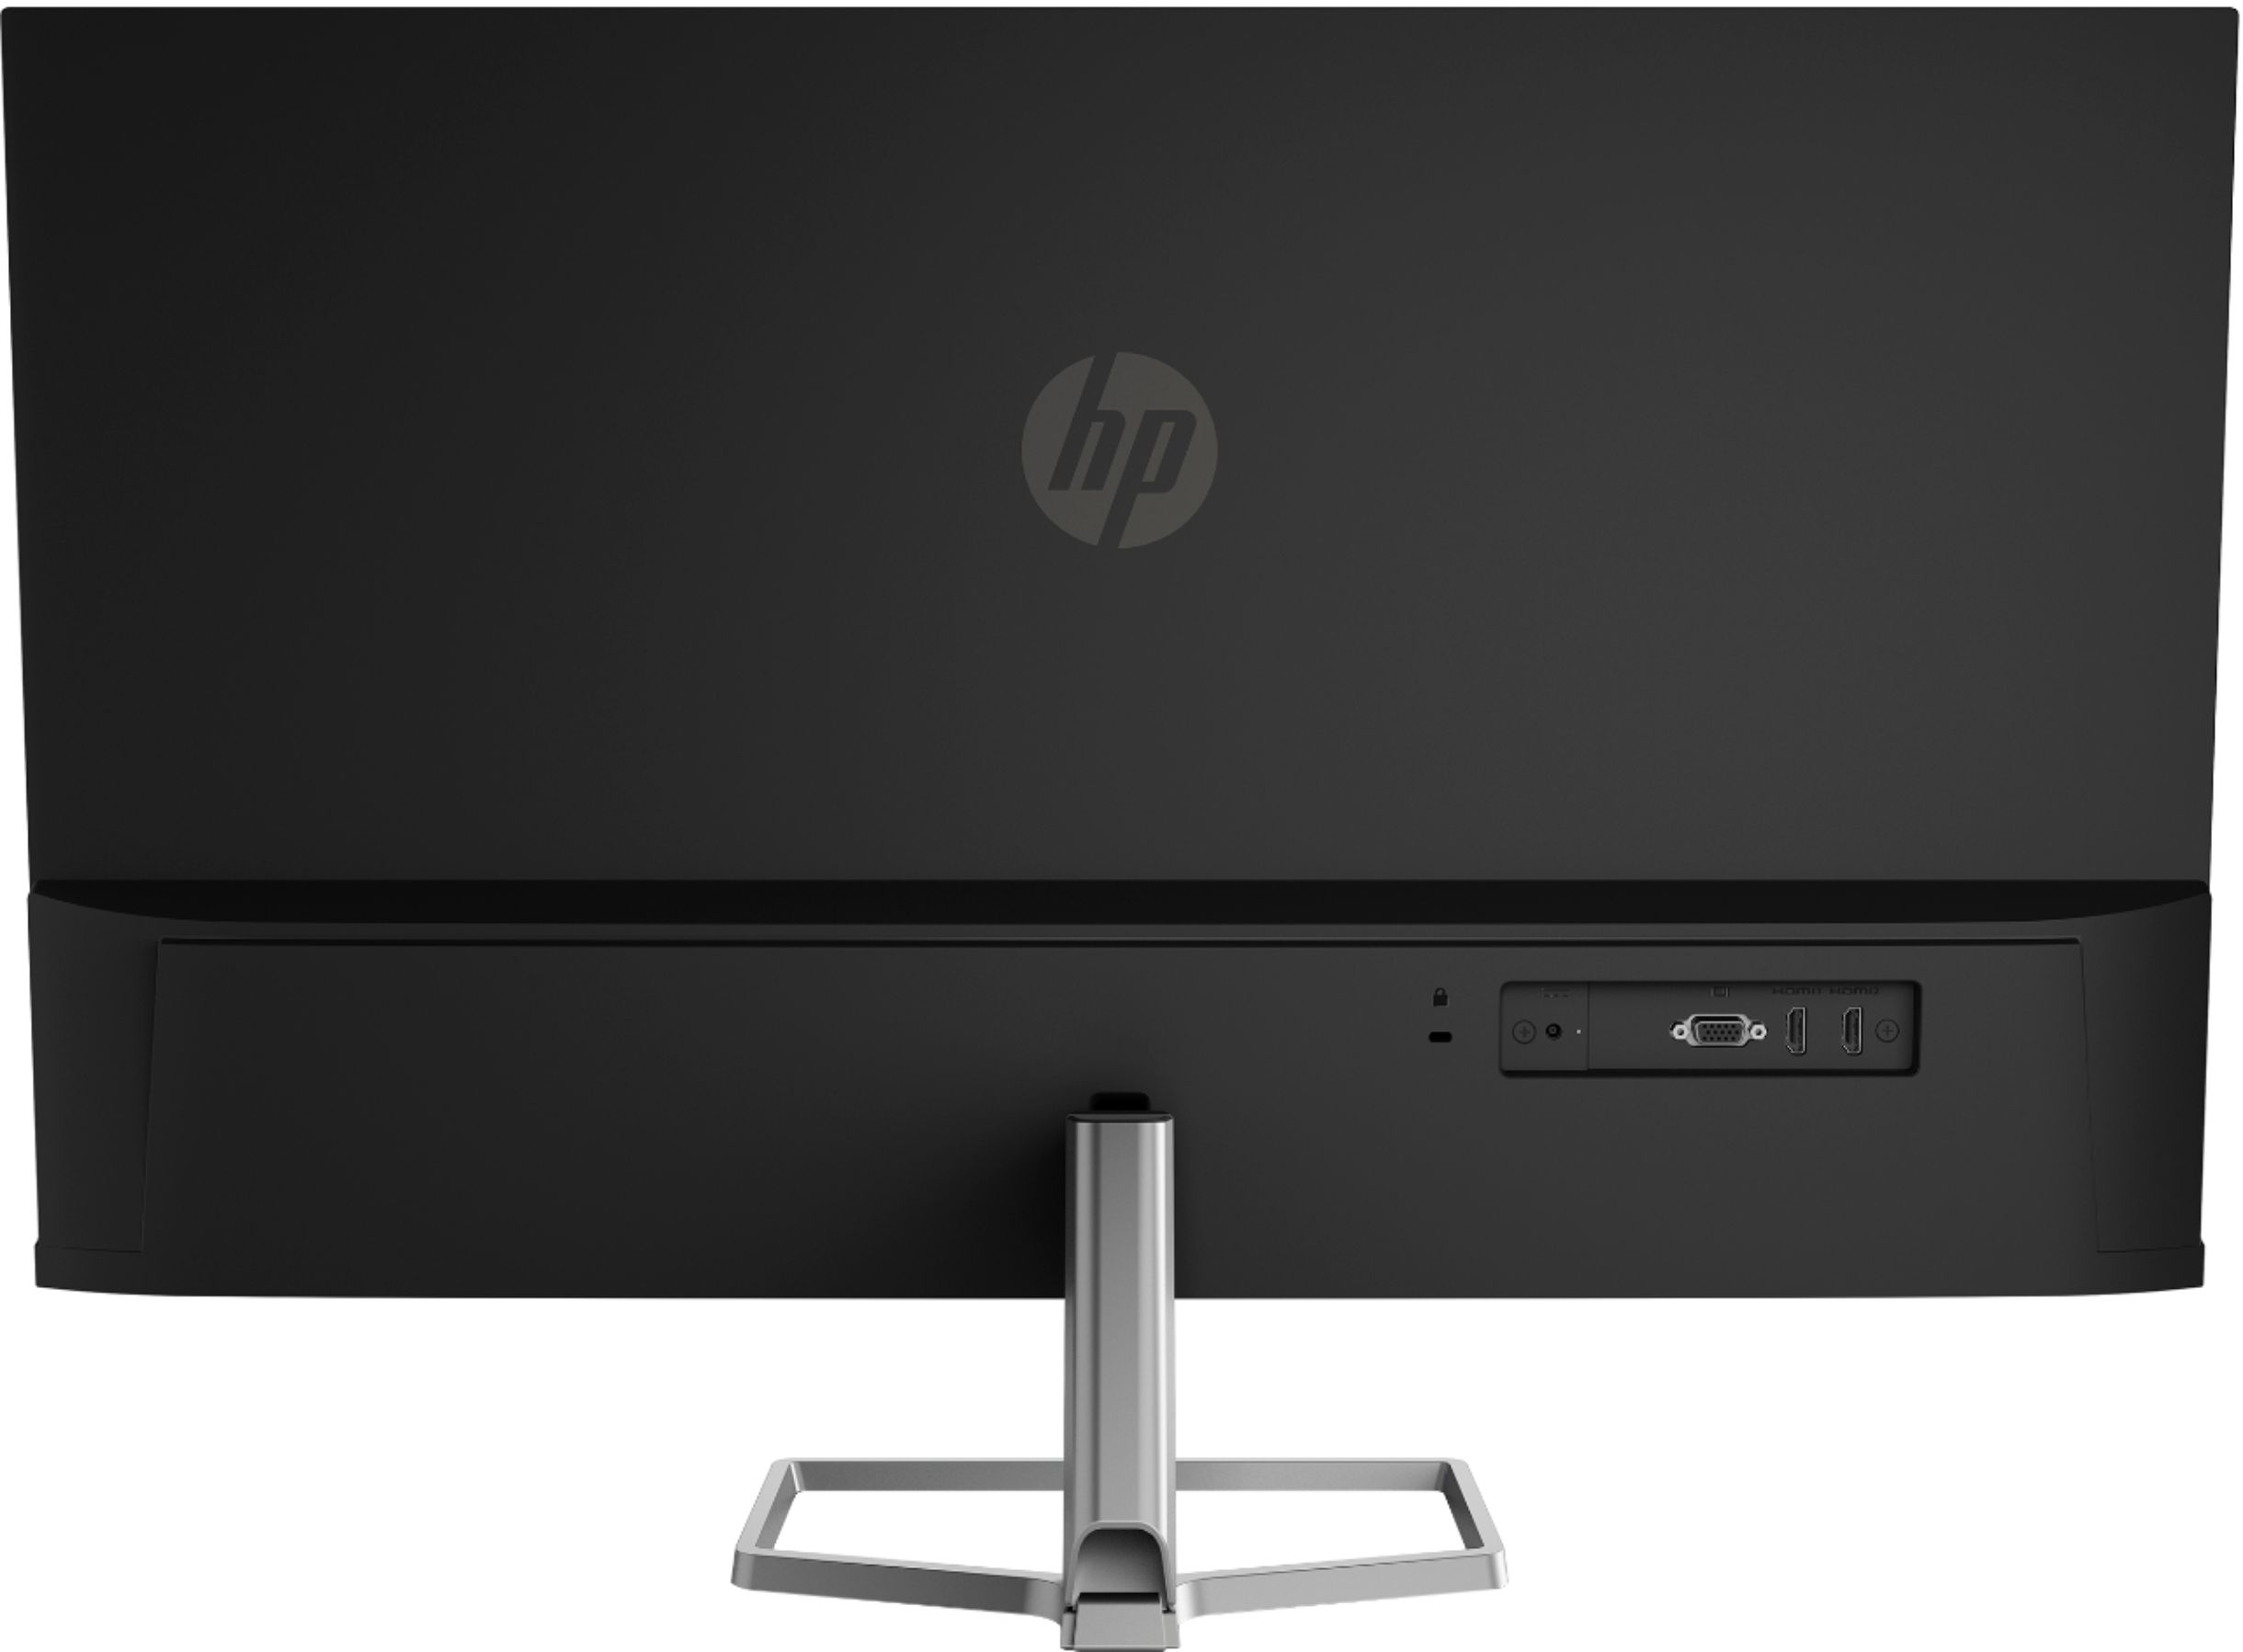 Back View: HP - 31.5" LED Full HD FreeSync Monitor - Silver & Black